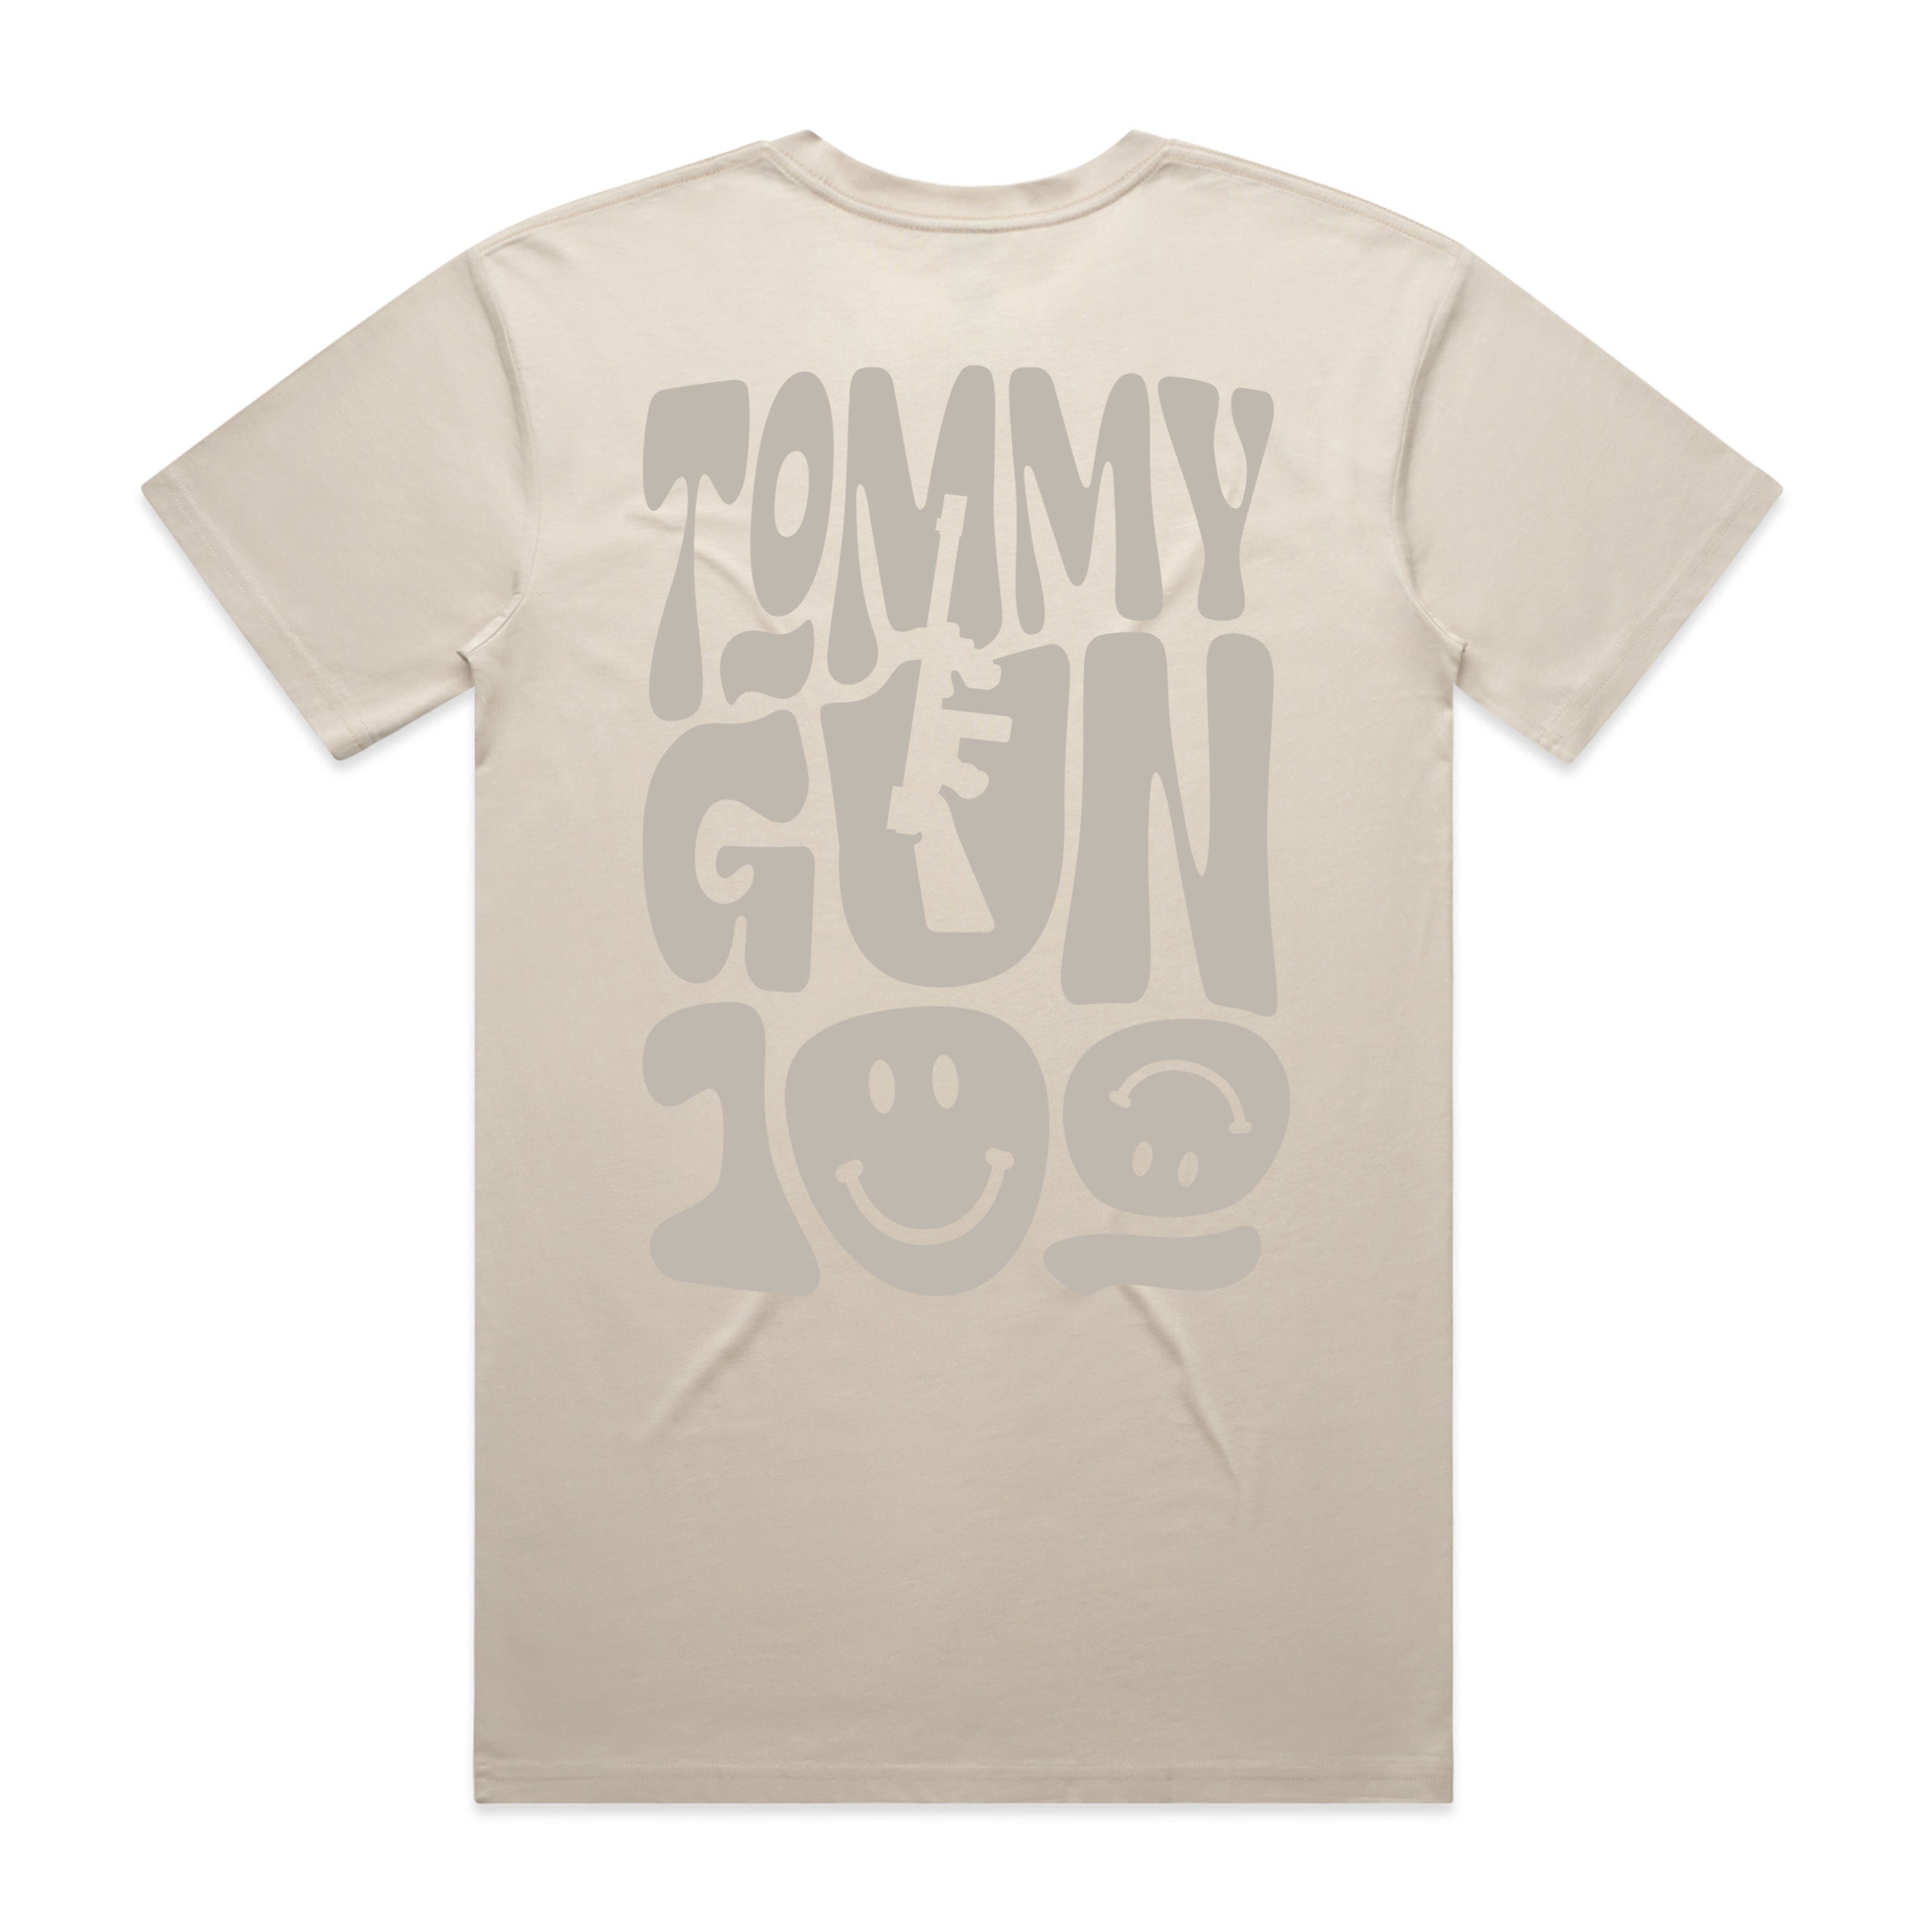 Tommy Gun Tee